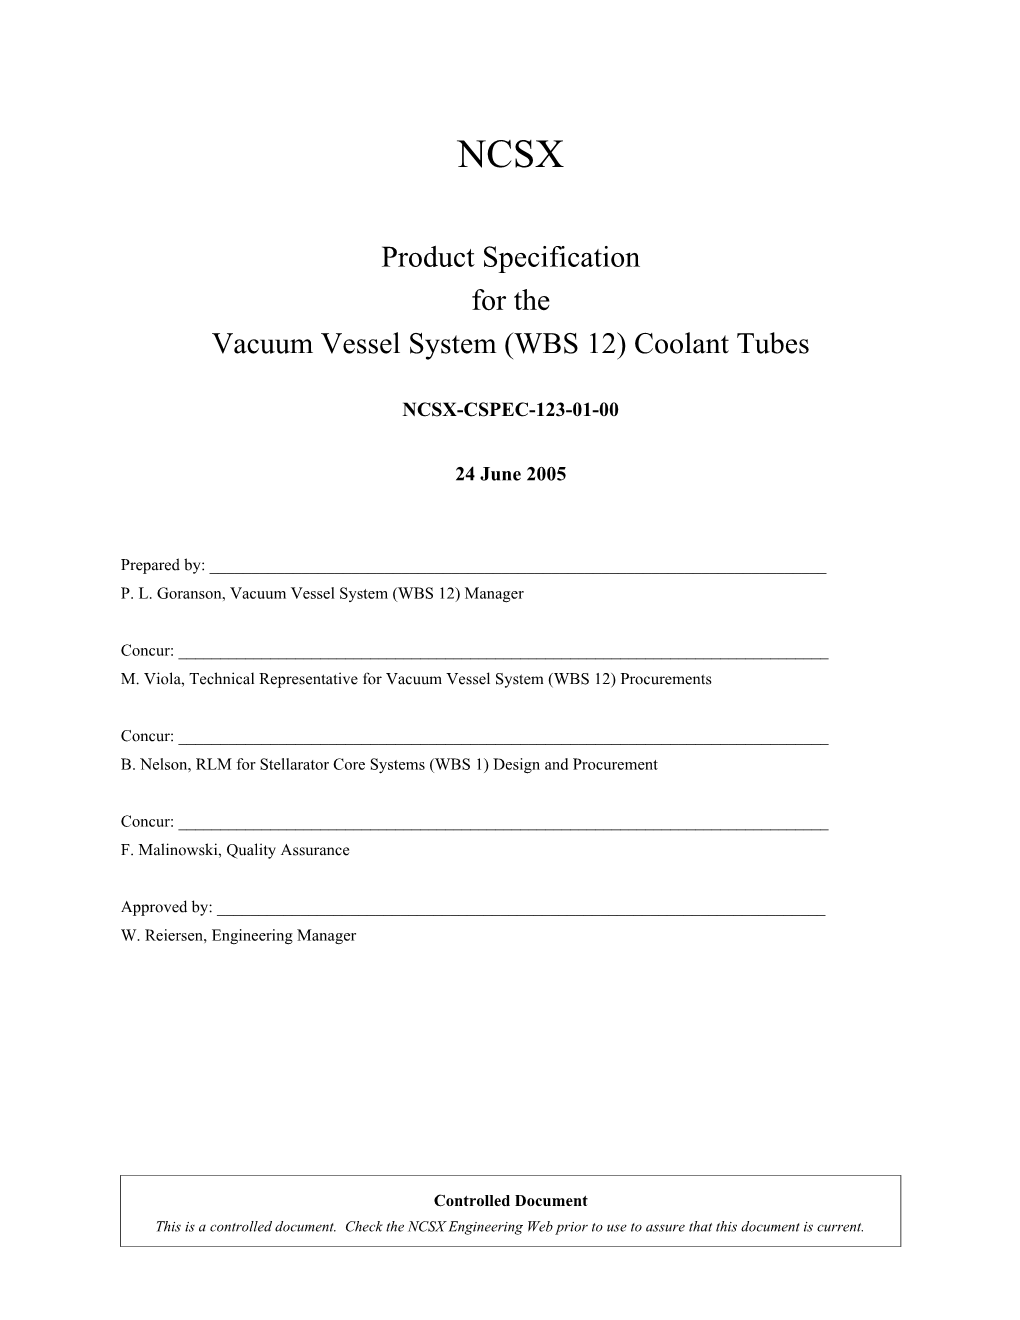 NCSX-CSPEC-123-01-00Vacuum Vessel Coolant Tube Product Specification